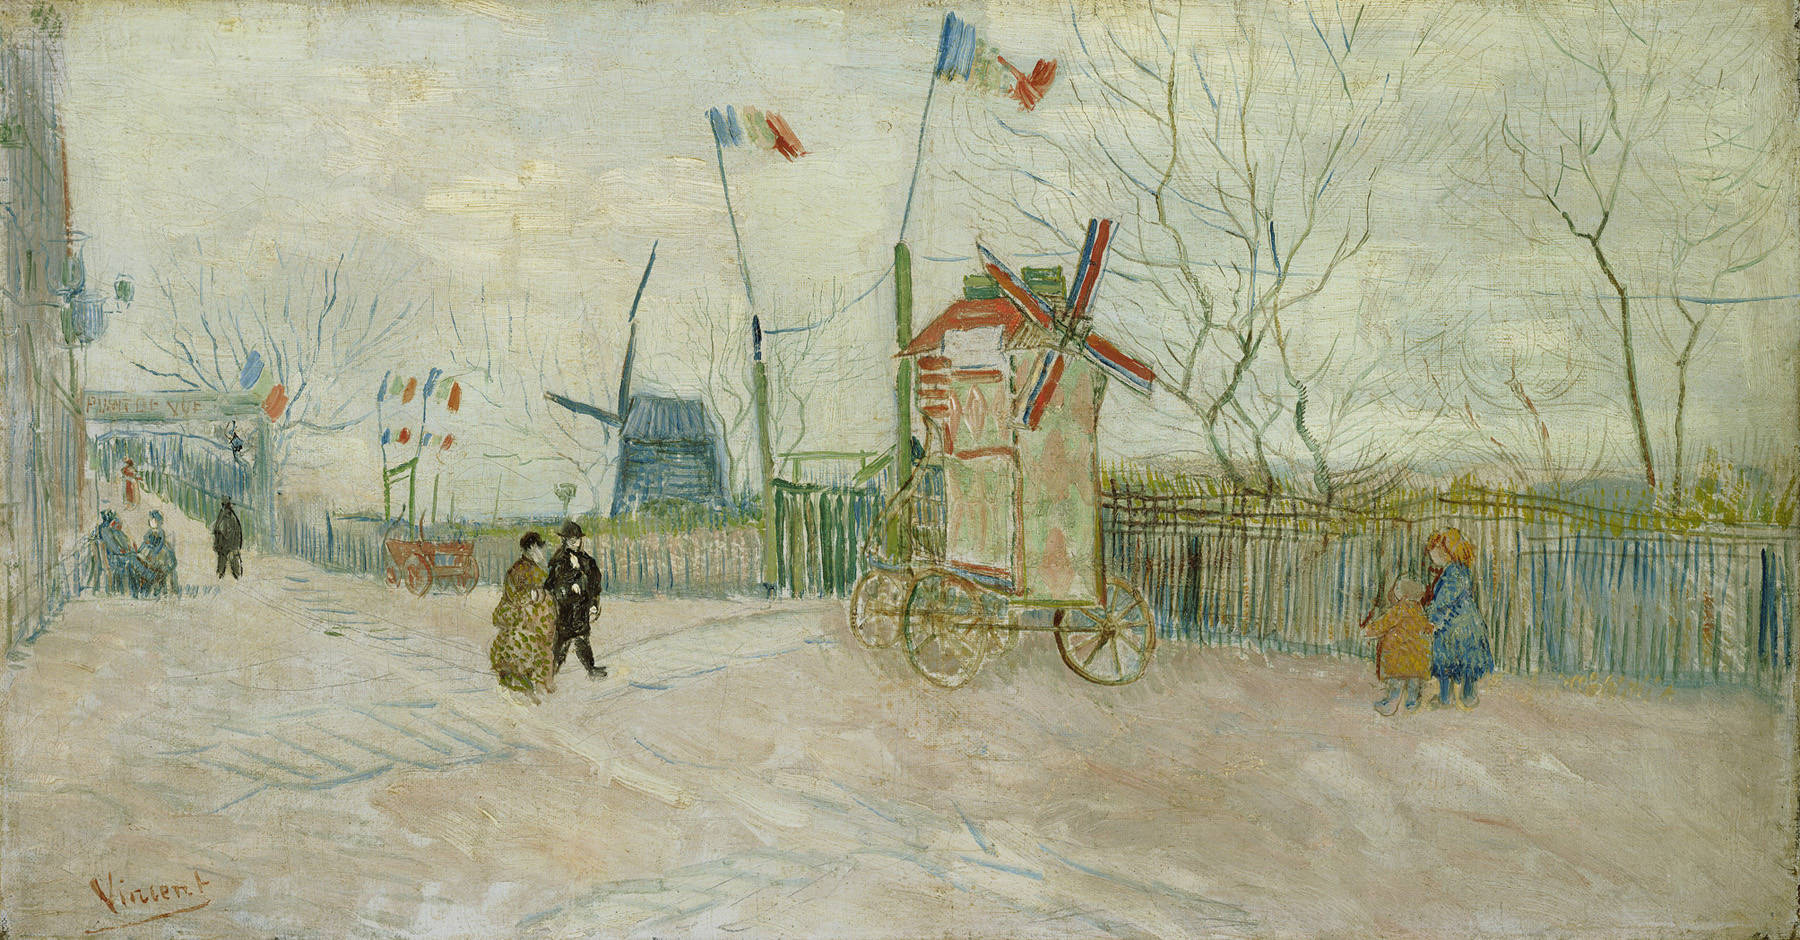 Escena callejera en Montmartre, Le moulin de poivre by Vincent van Gogh - 1887 - 34.5 x 64.5 cm Van Gogh Museum